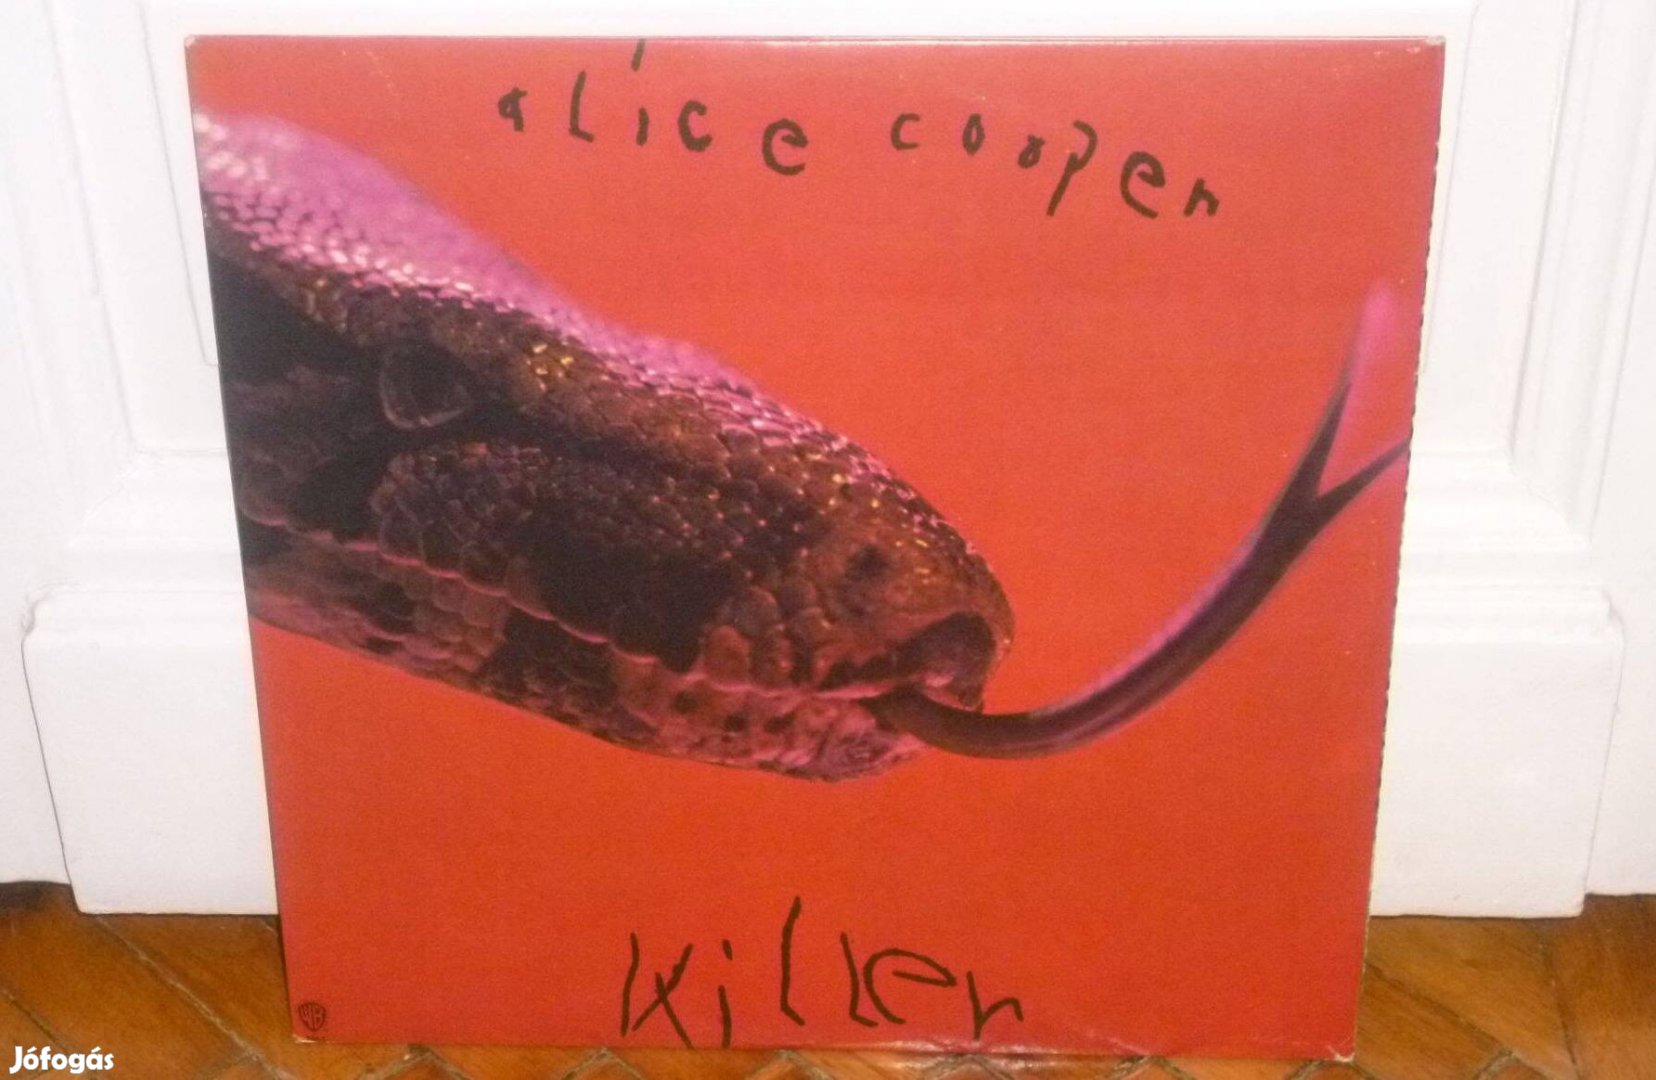 Alice Cooper - Killer LP 1973 Canada Gatefold